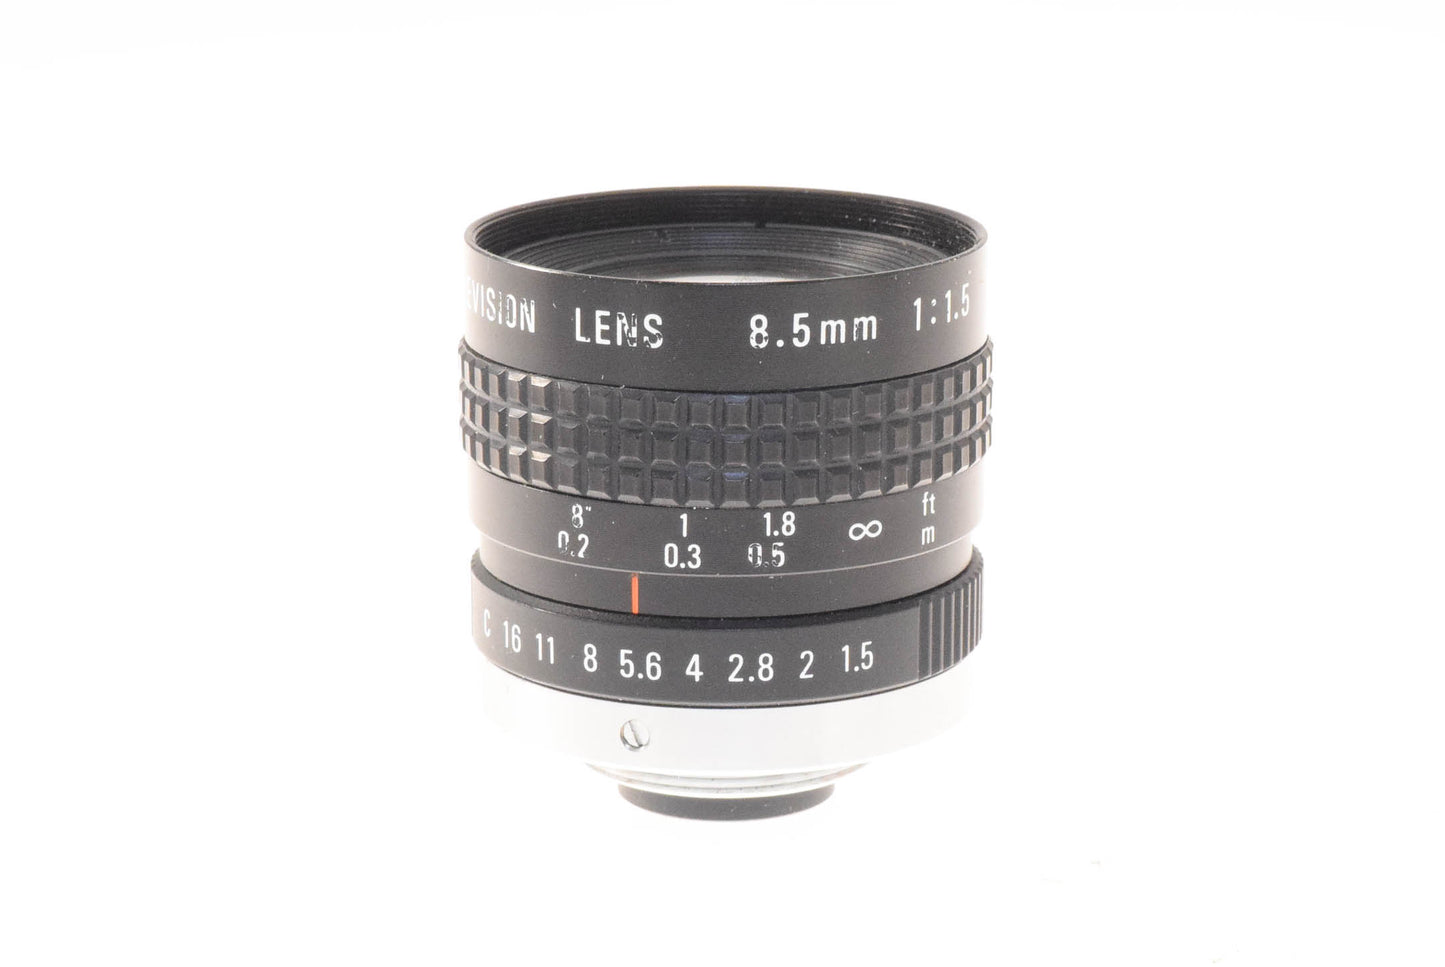 Cosmicar 8.5mm f1.5 TV Lens - Lens